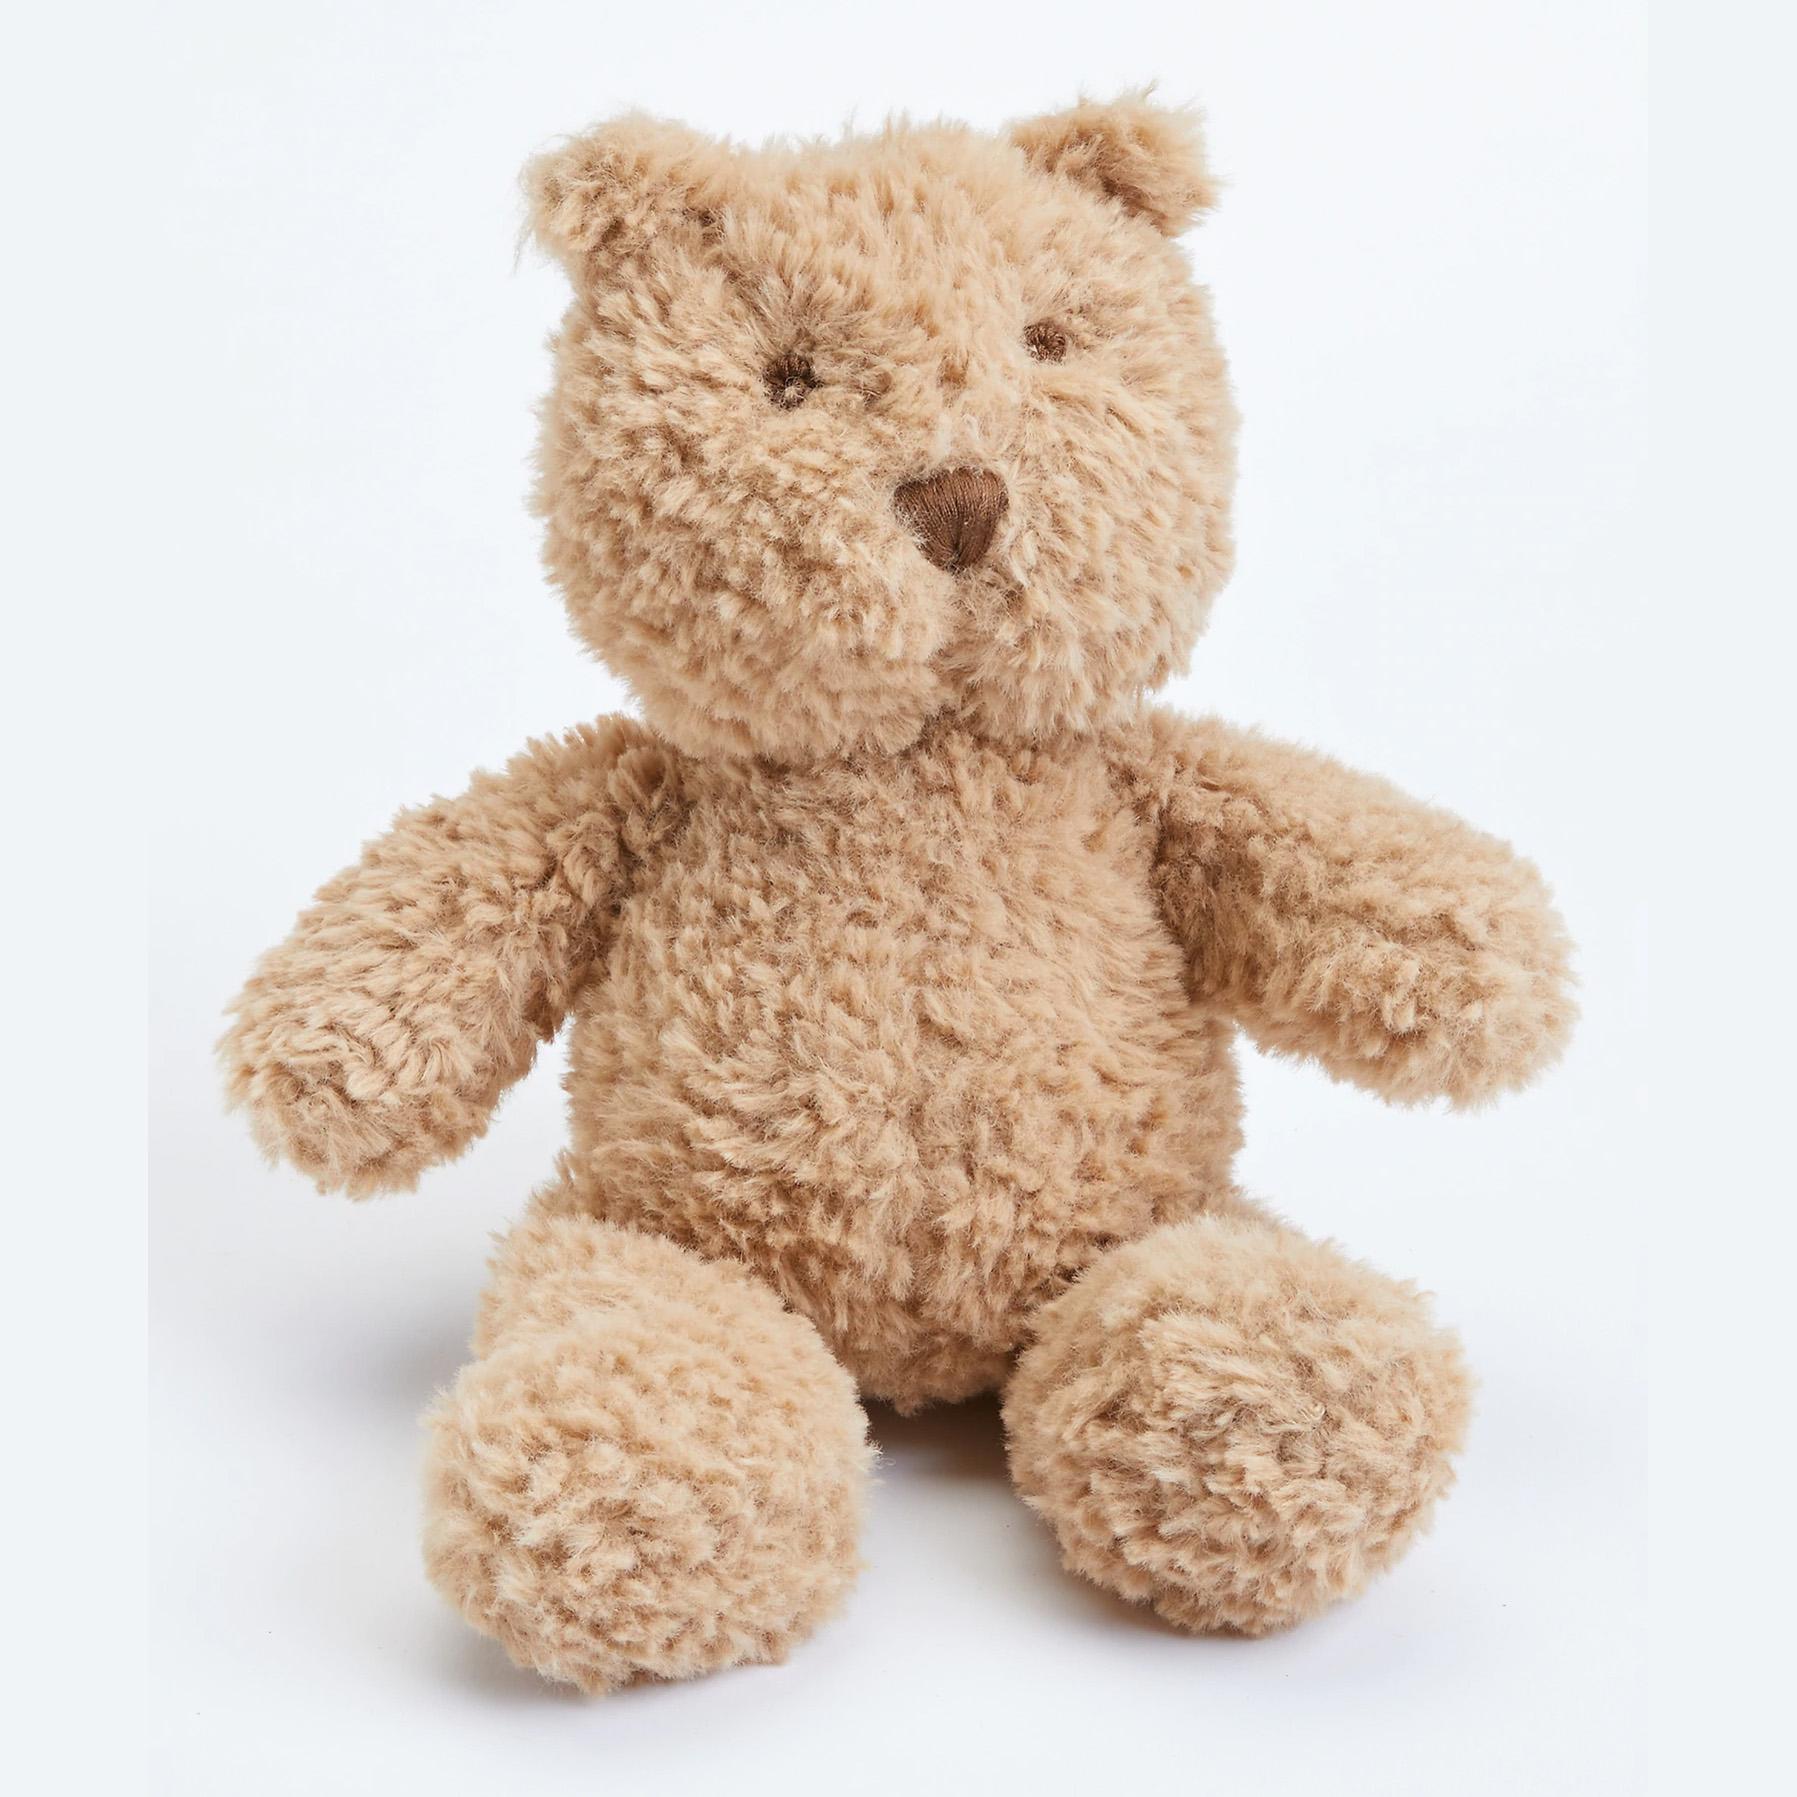 Gap Baby Brannan Bear Plush Toy for $8.49 Shipped